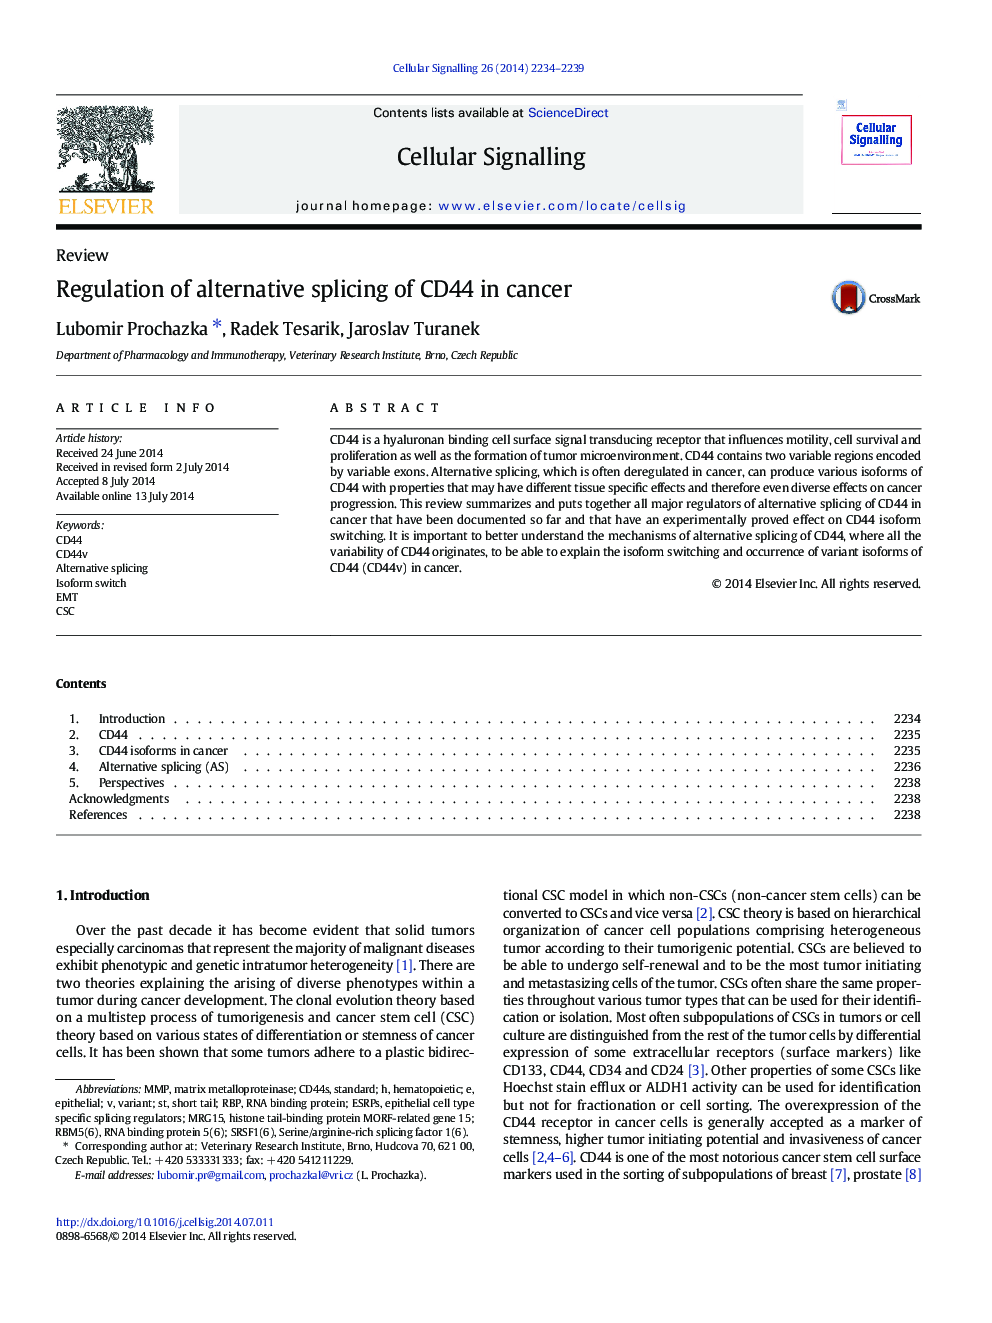 Regulation of alternative splicing of CD44 in cancer